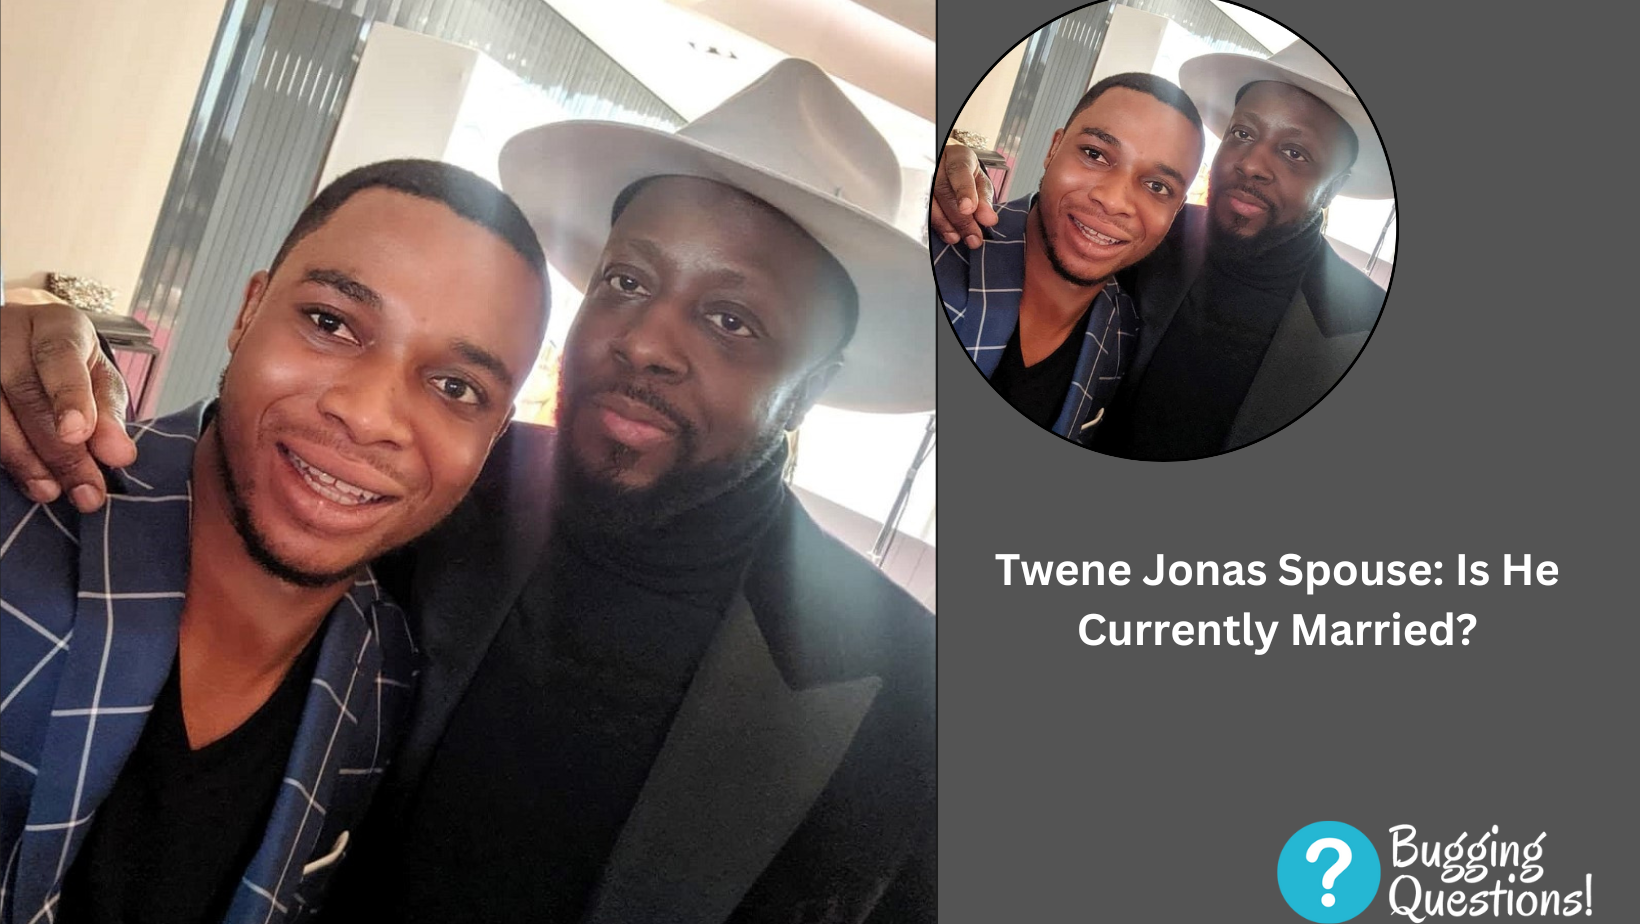 Twene Jonas Spouse: Is He Currently Married?